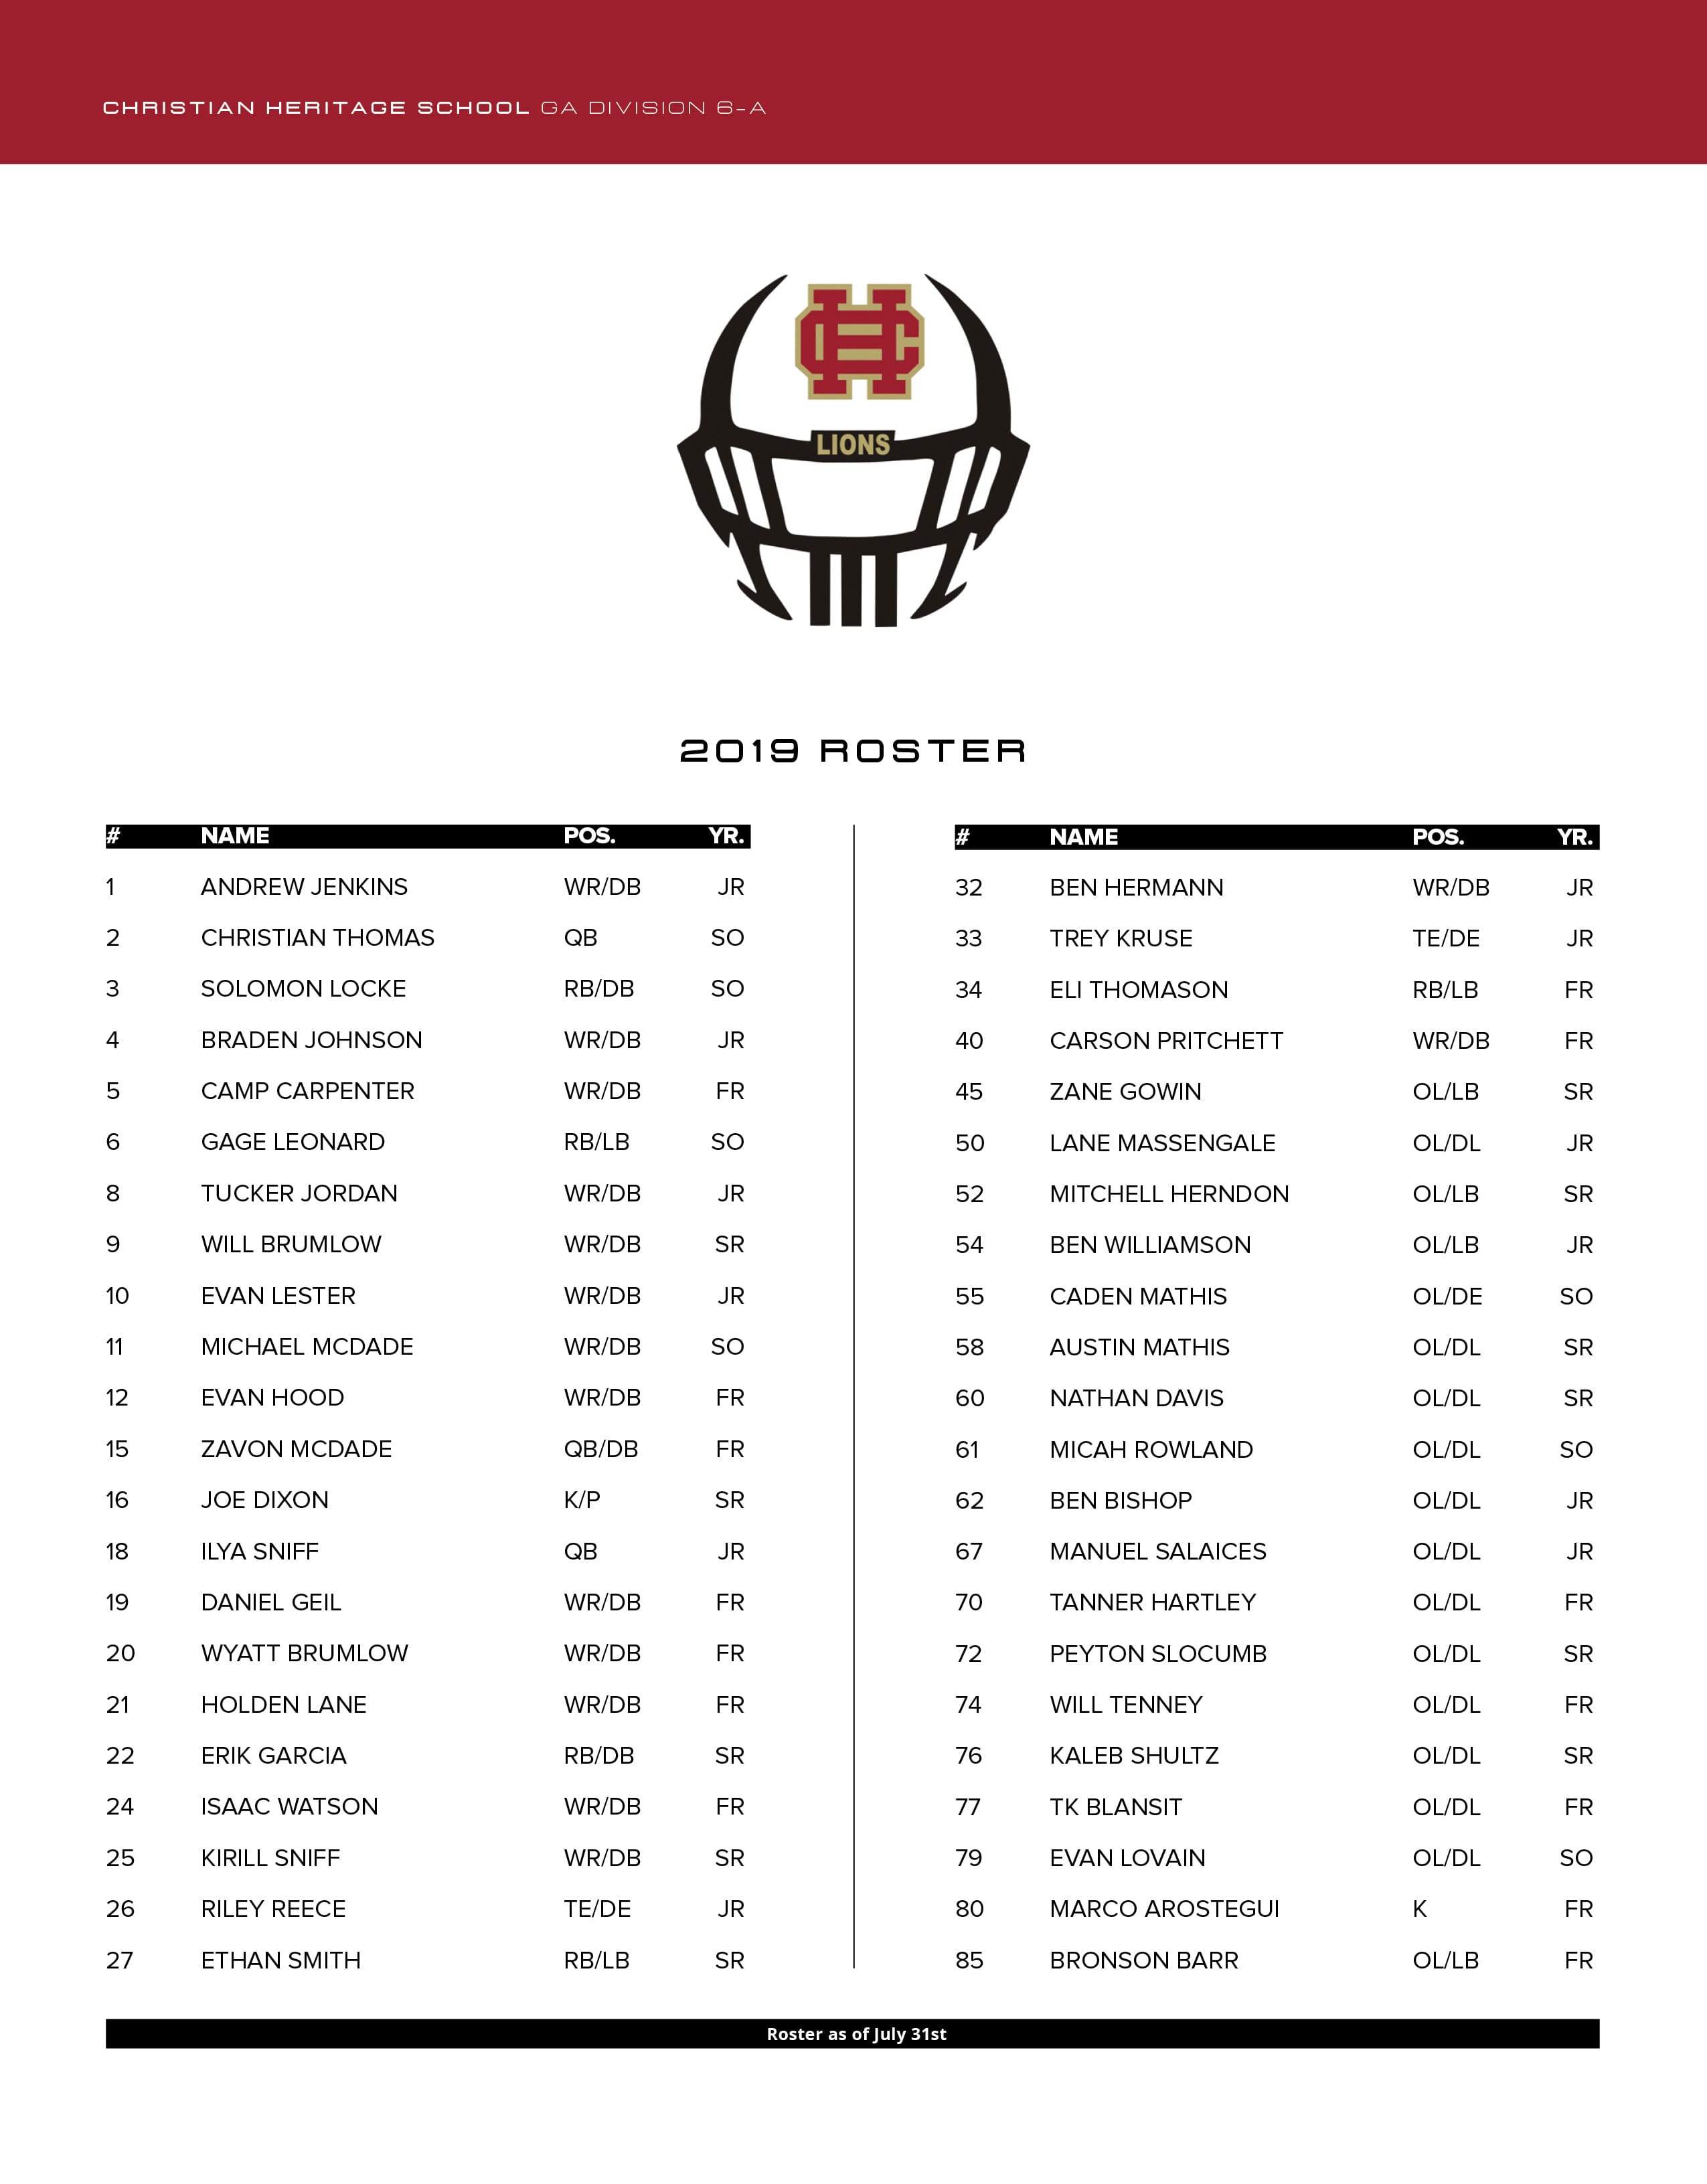 Christian heritage school football 2019 roster